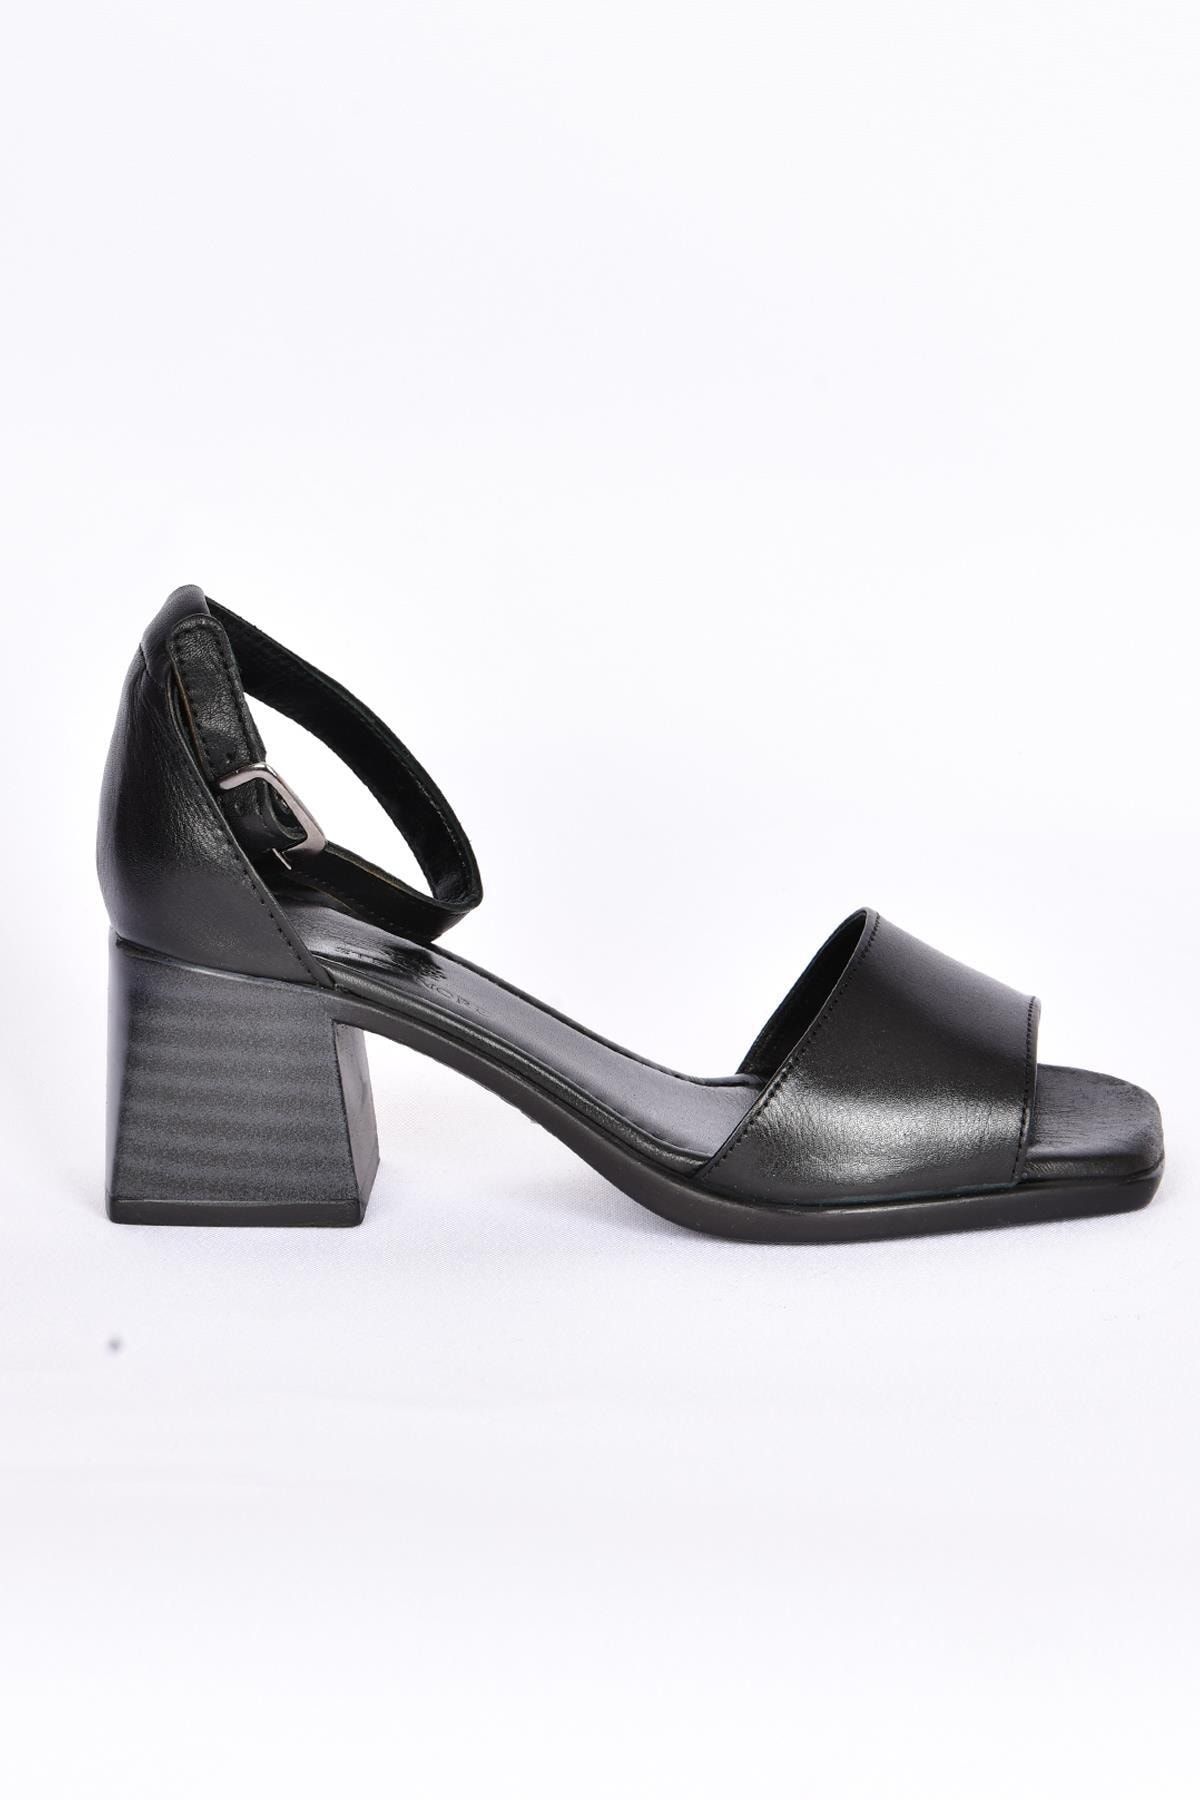 STEP MORE Z13454 Kadın Siyah Topuklu Sandalet